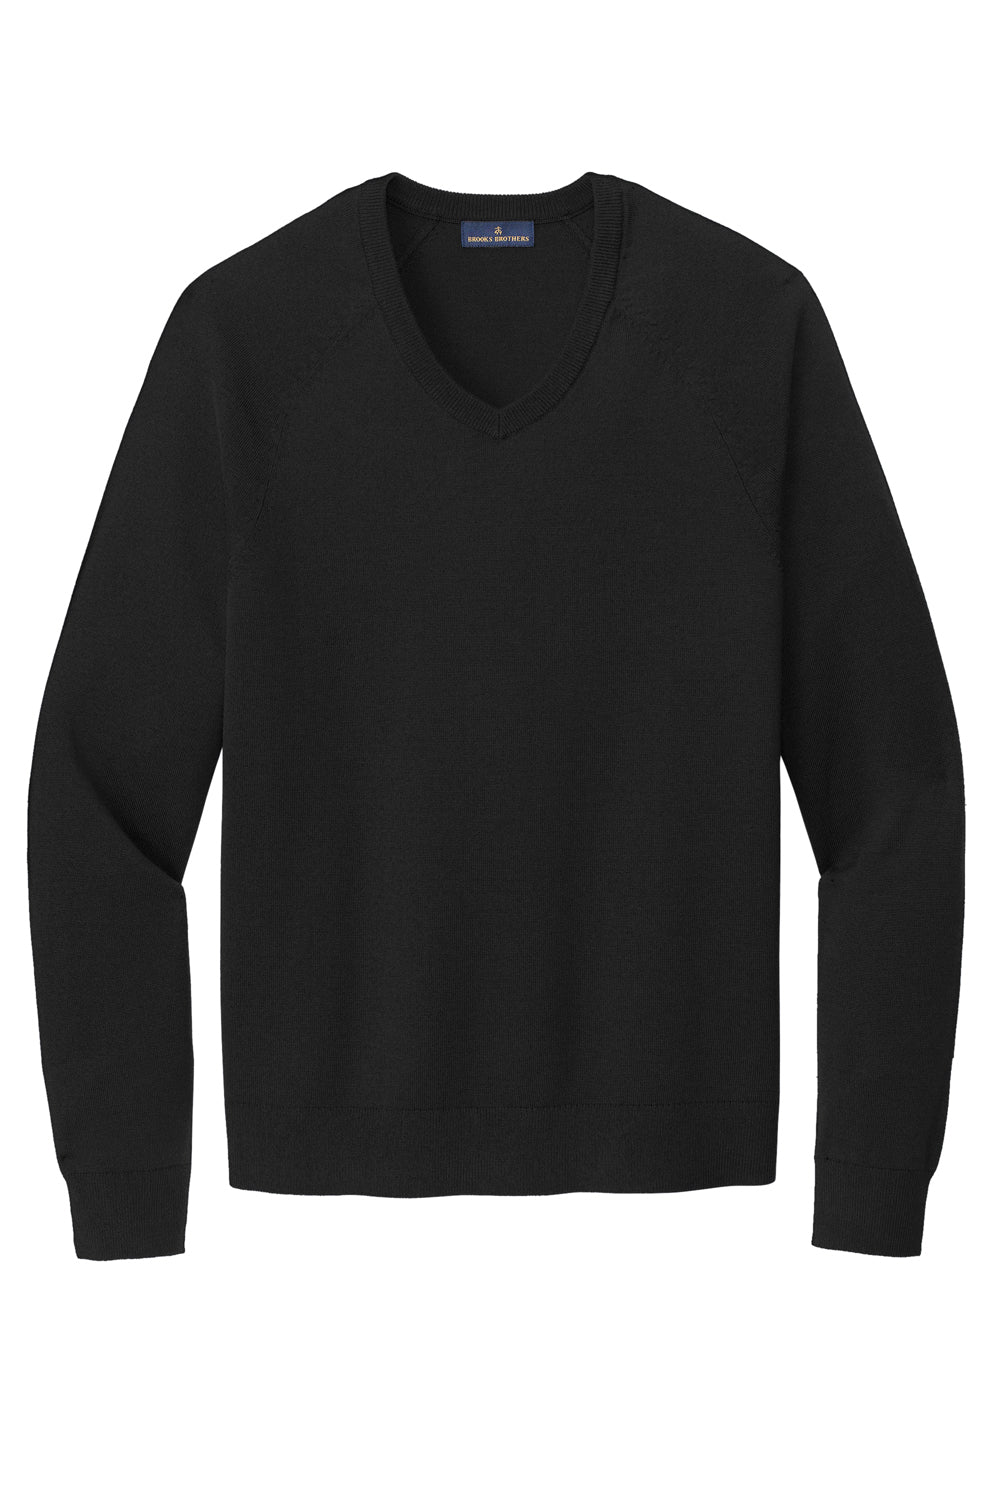 Brooks Brothers Mens Long Sleeve V-Neck Sweater Deep Black Flat Front